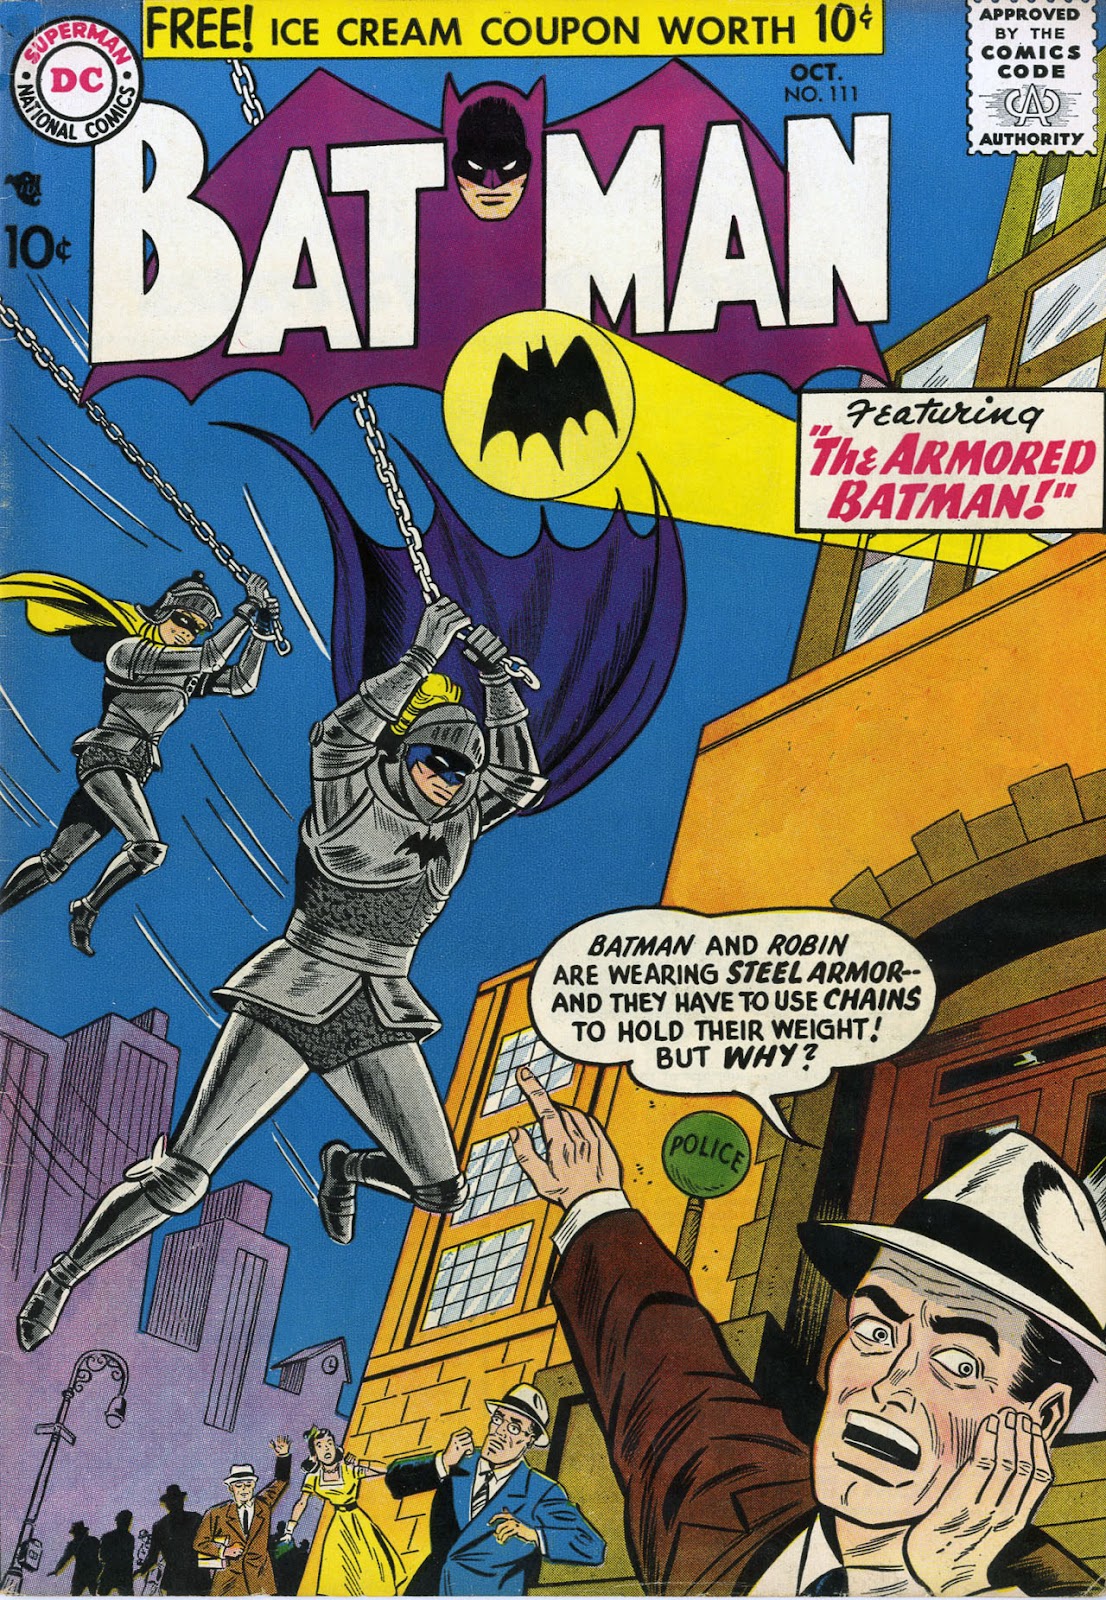 Read Batman (1940) Issue #111 Online